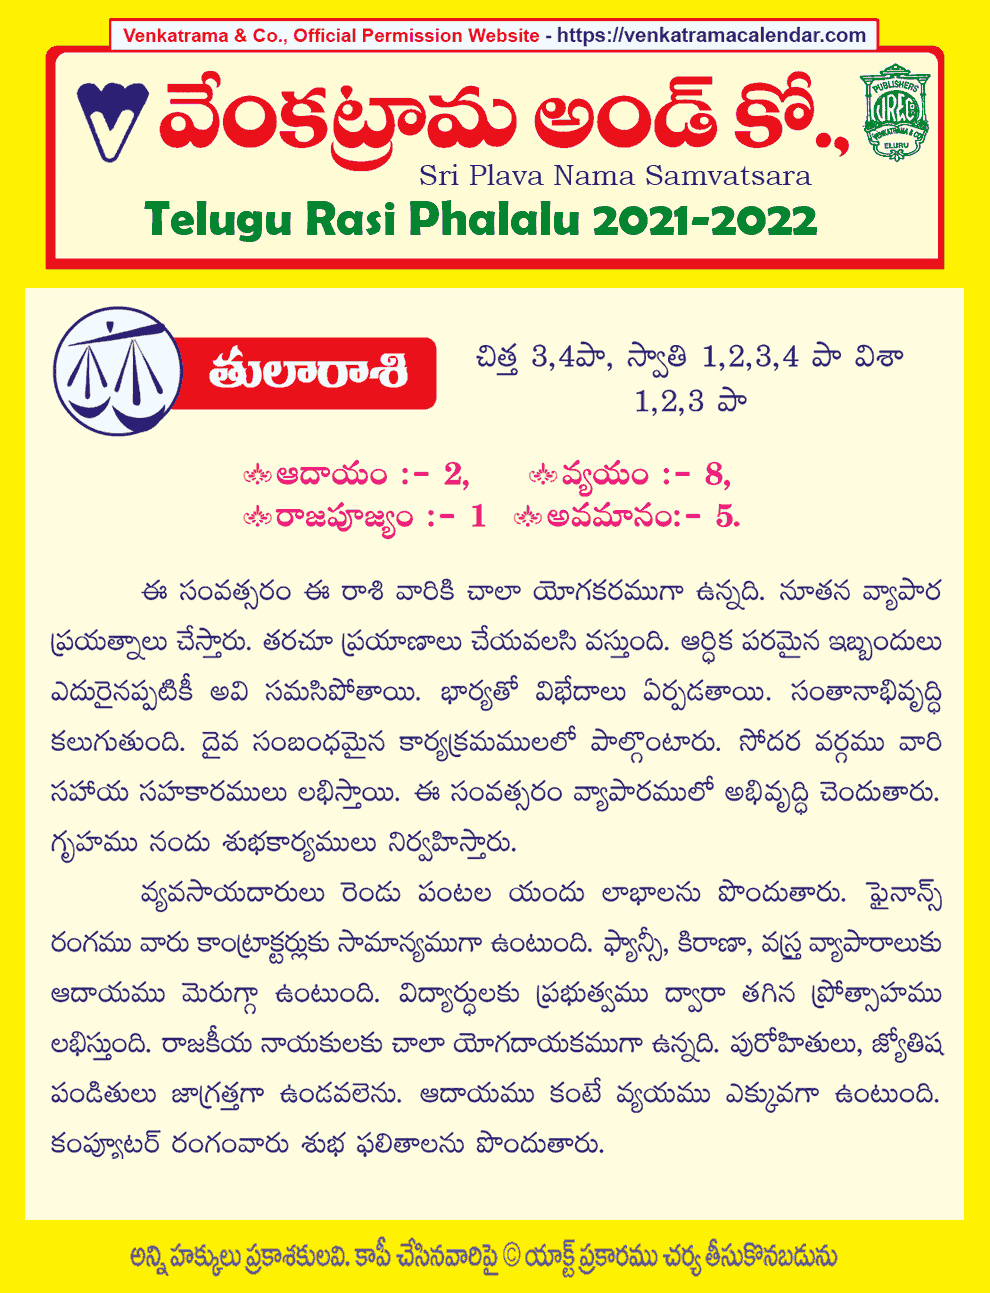 2021-2022-Rasi-Phalalu-Venkatrama-Co-Tula.png